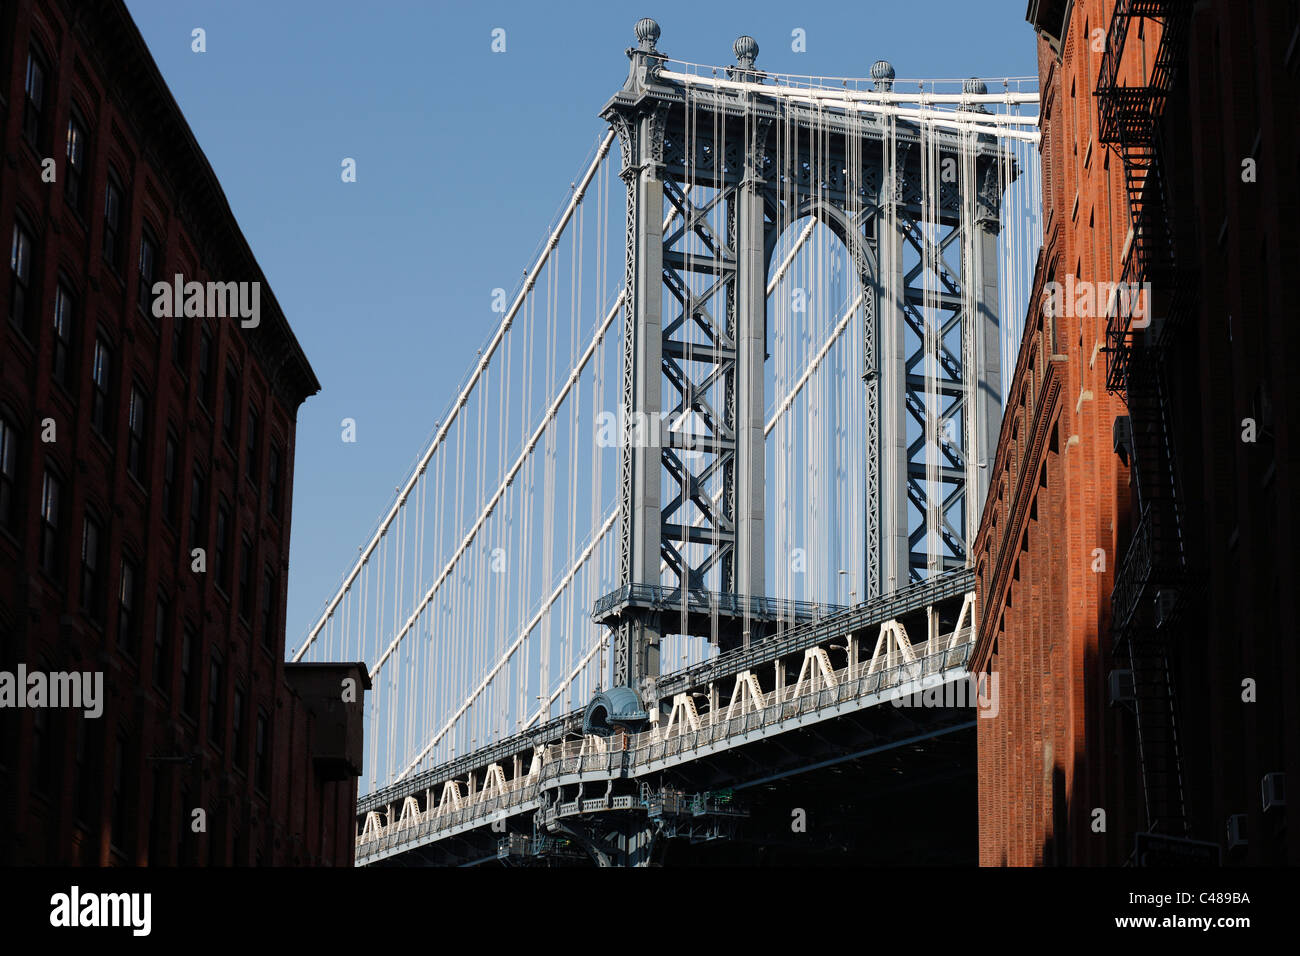 The Manhattan Bridge seen from a street canyon, New York City, USA Stock Photo